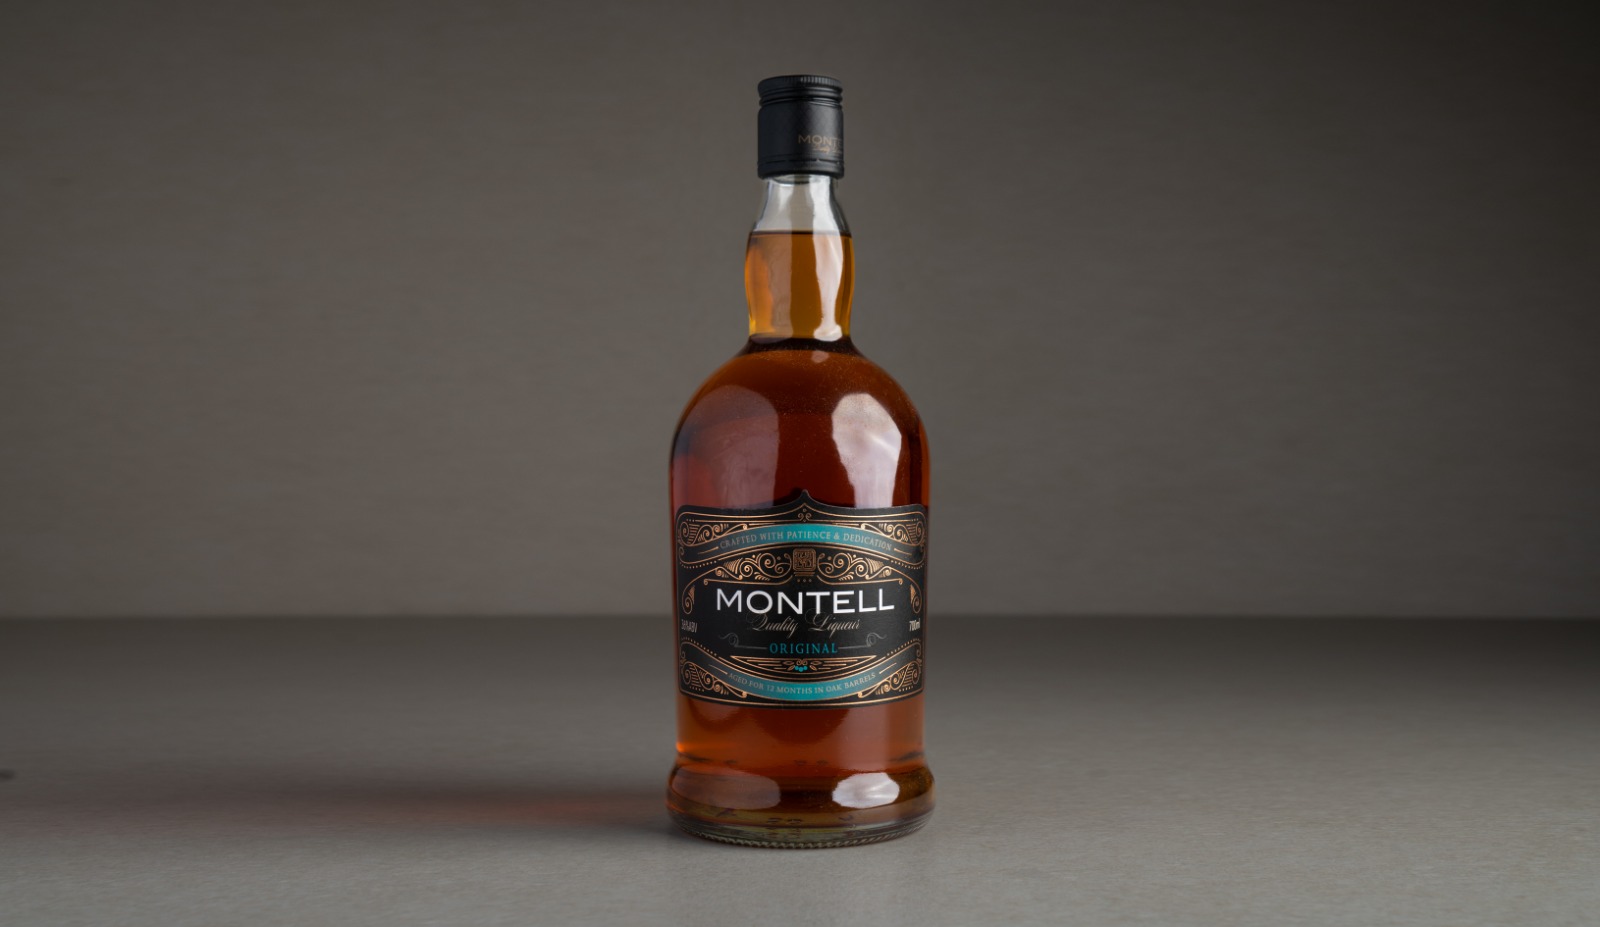 Montell Original whiskey